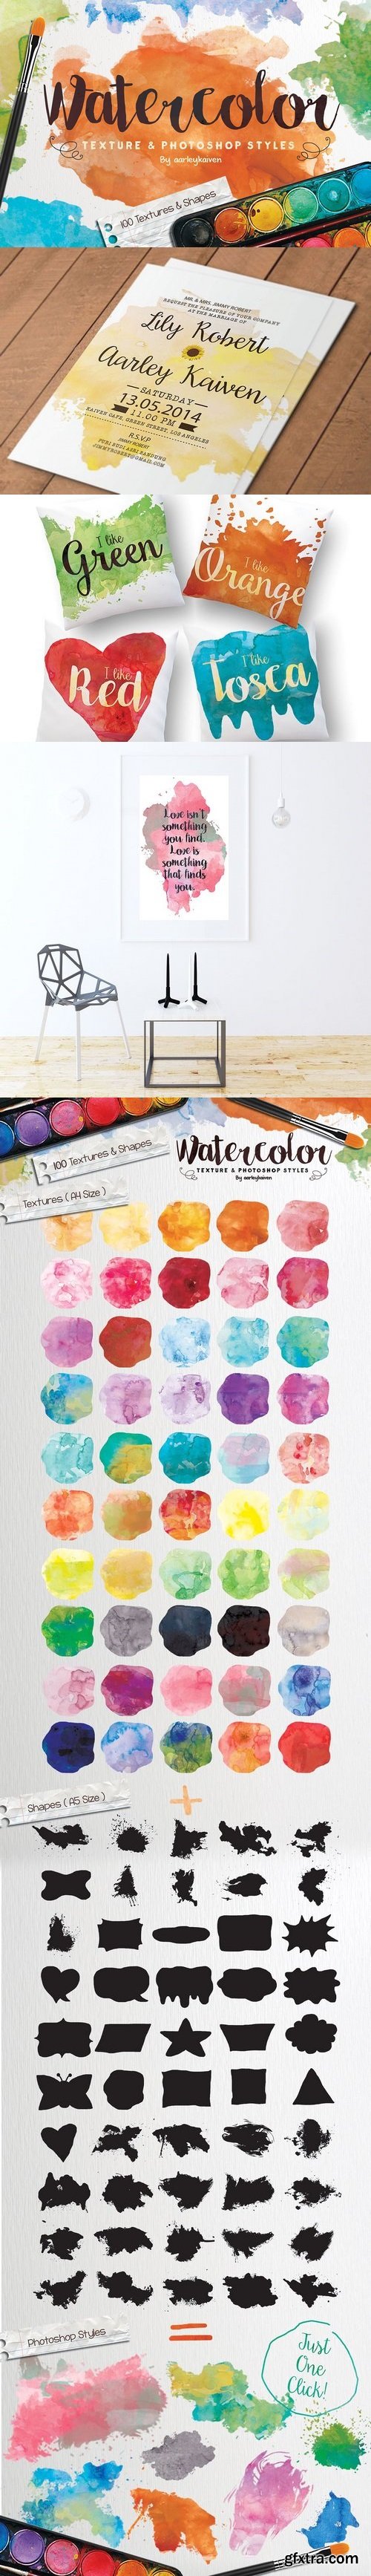 CM - Watercolor Texture & Styles 284507